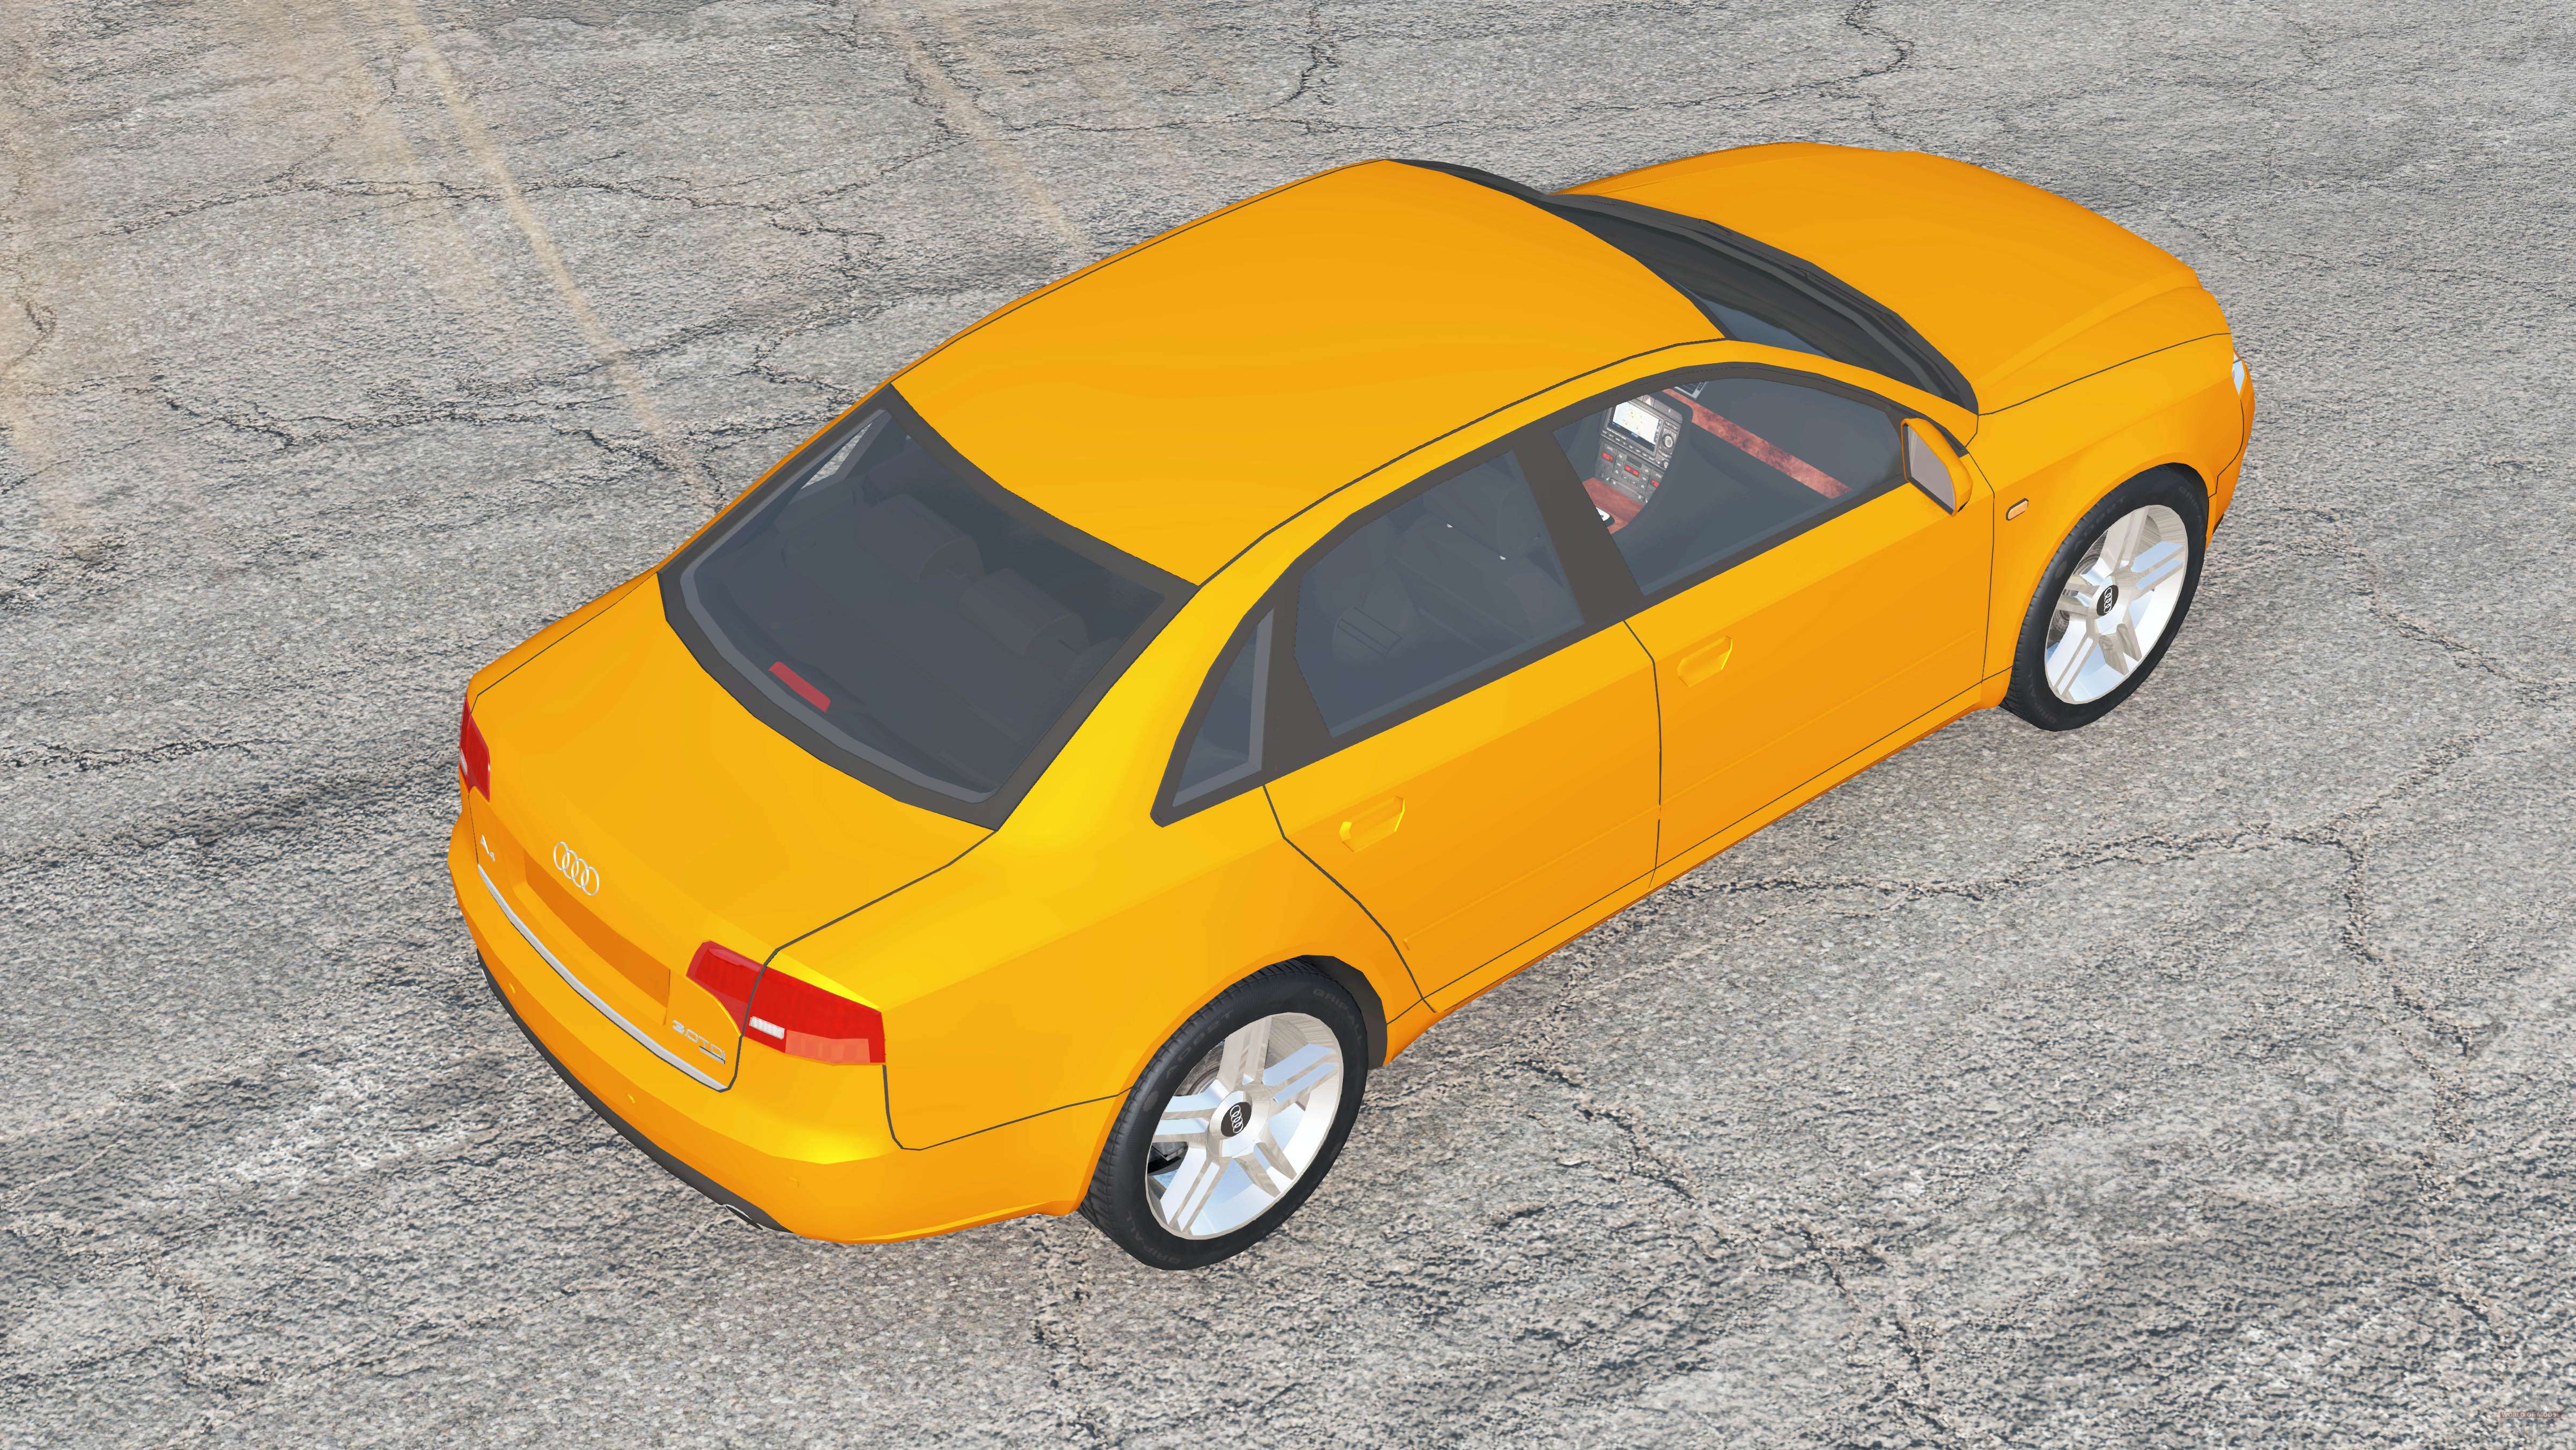 Audi A4 B7 - Revamped 1.5 - BeamNG.drive